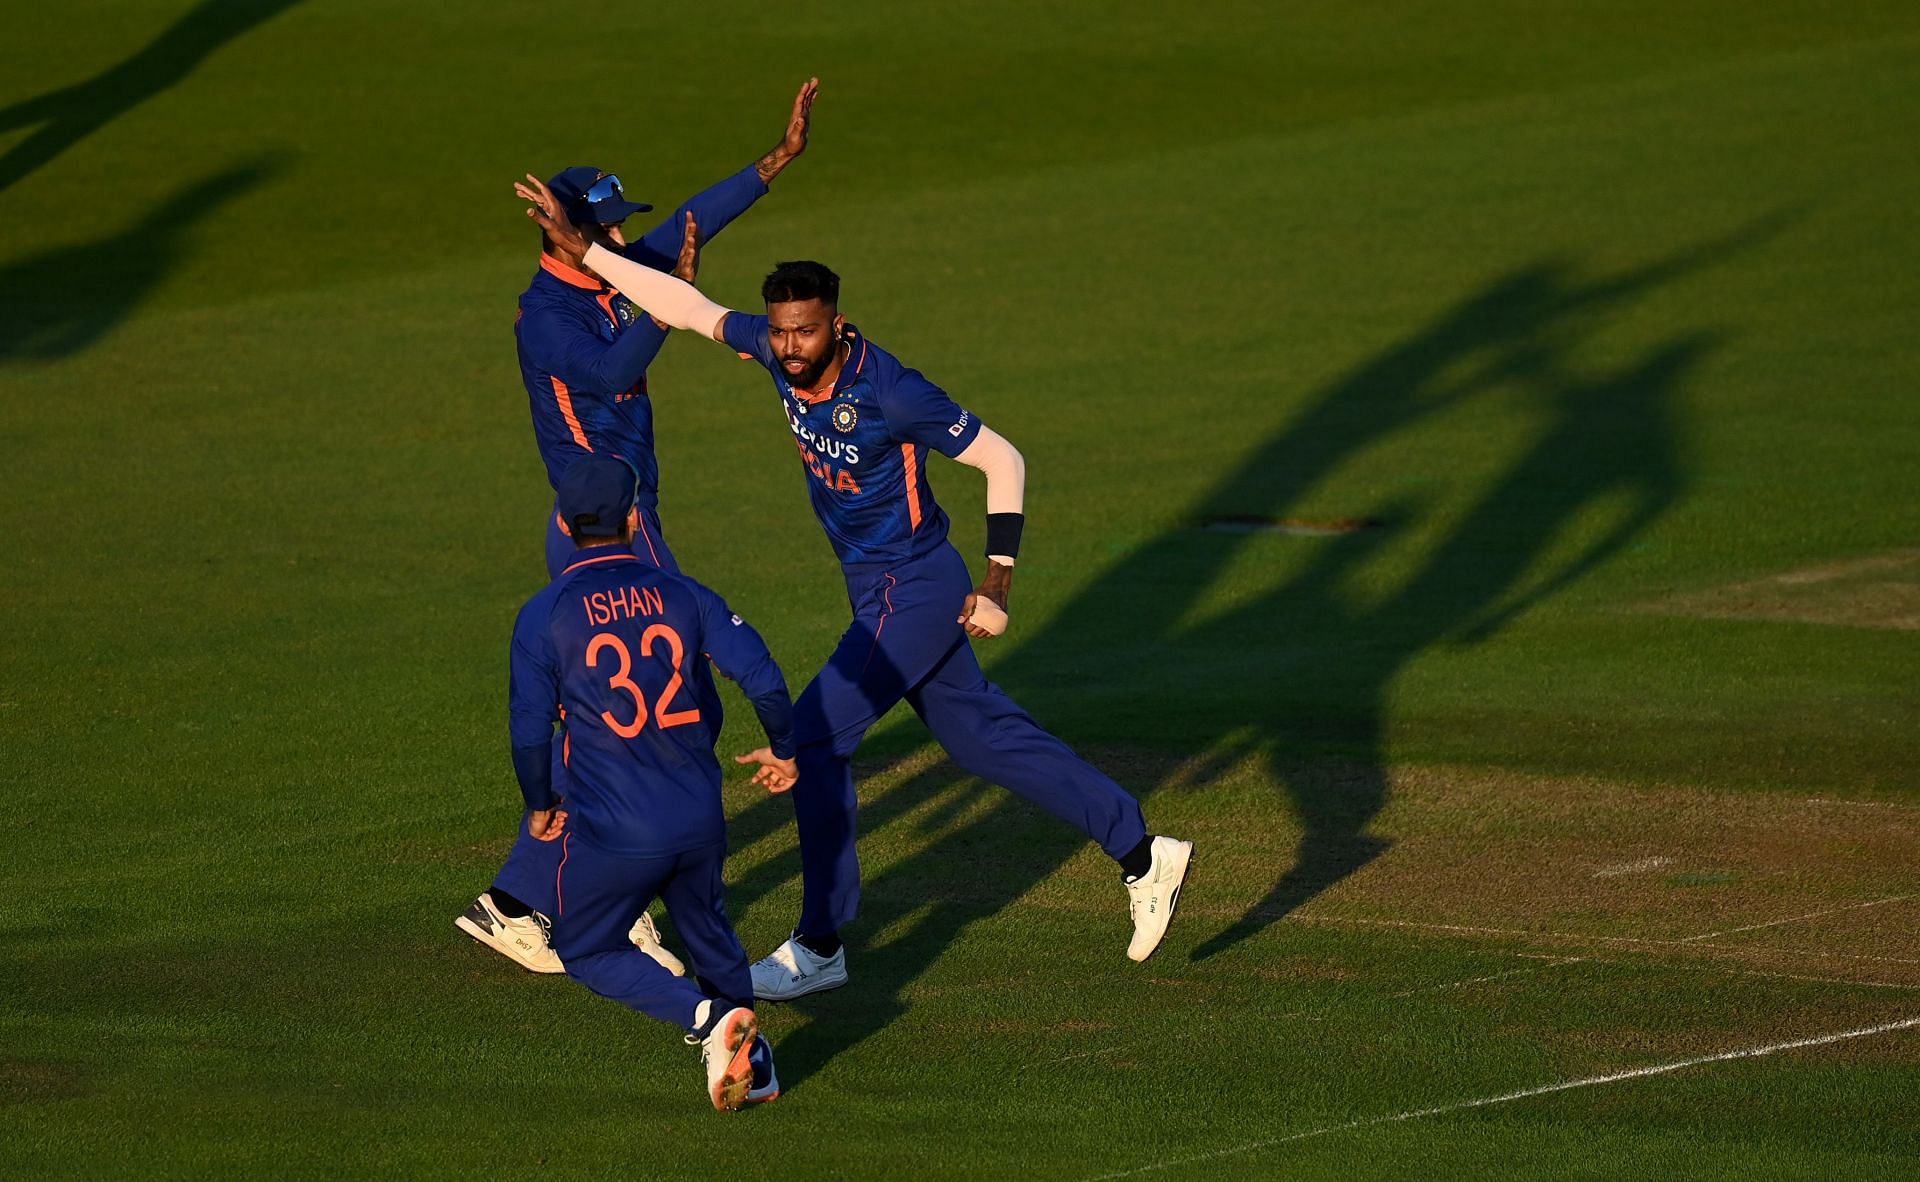 Hardik Pandya celebrates a wicket during IND vs ENG 1st T20I